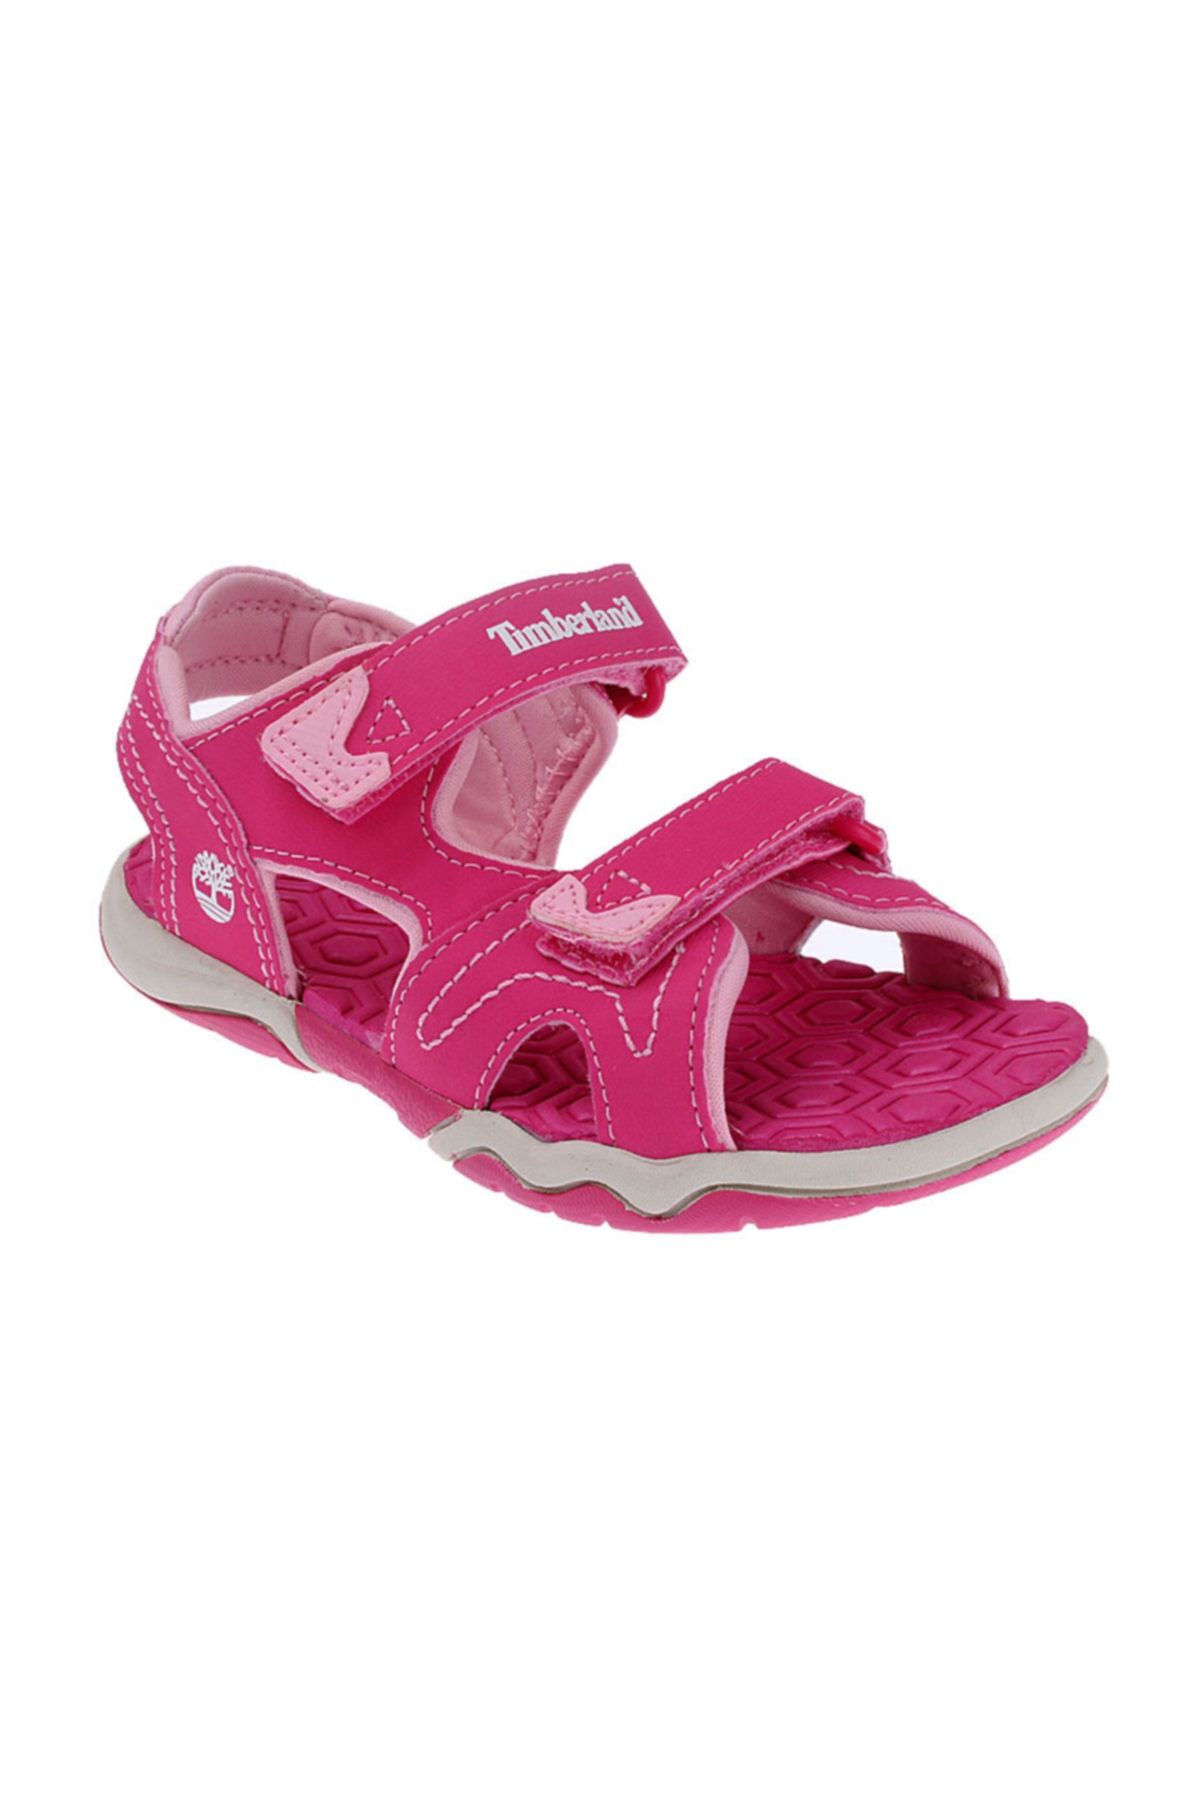 Timberland Kız Çocuk Pembe Ayakkabı 1Tık2015090_Pnk